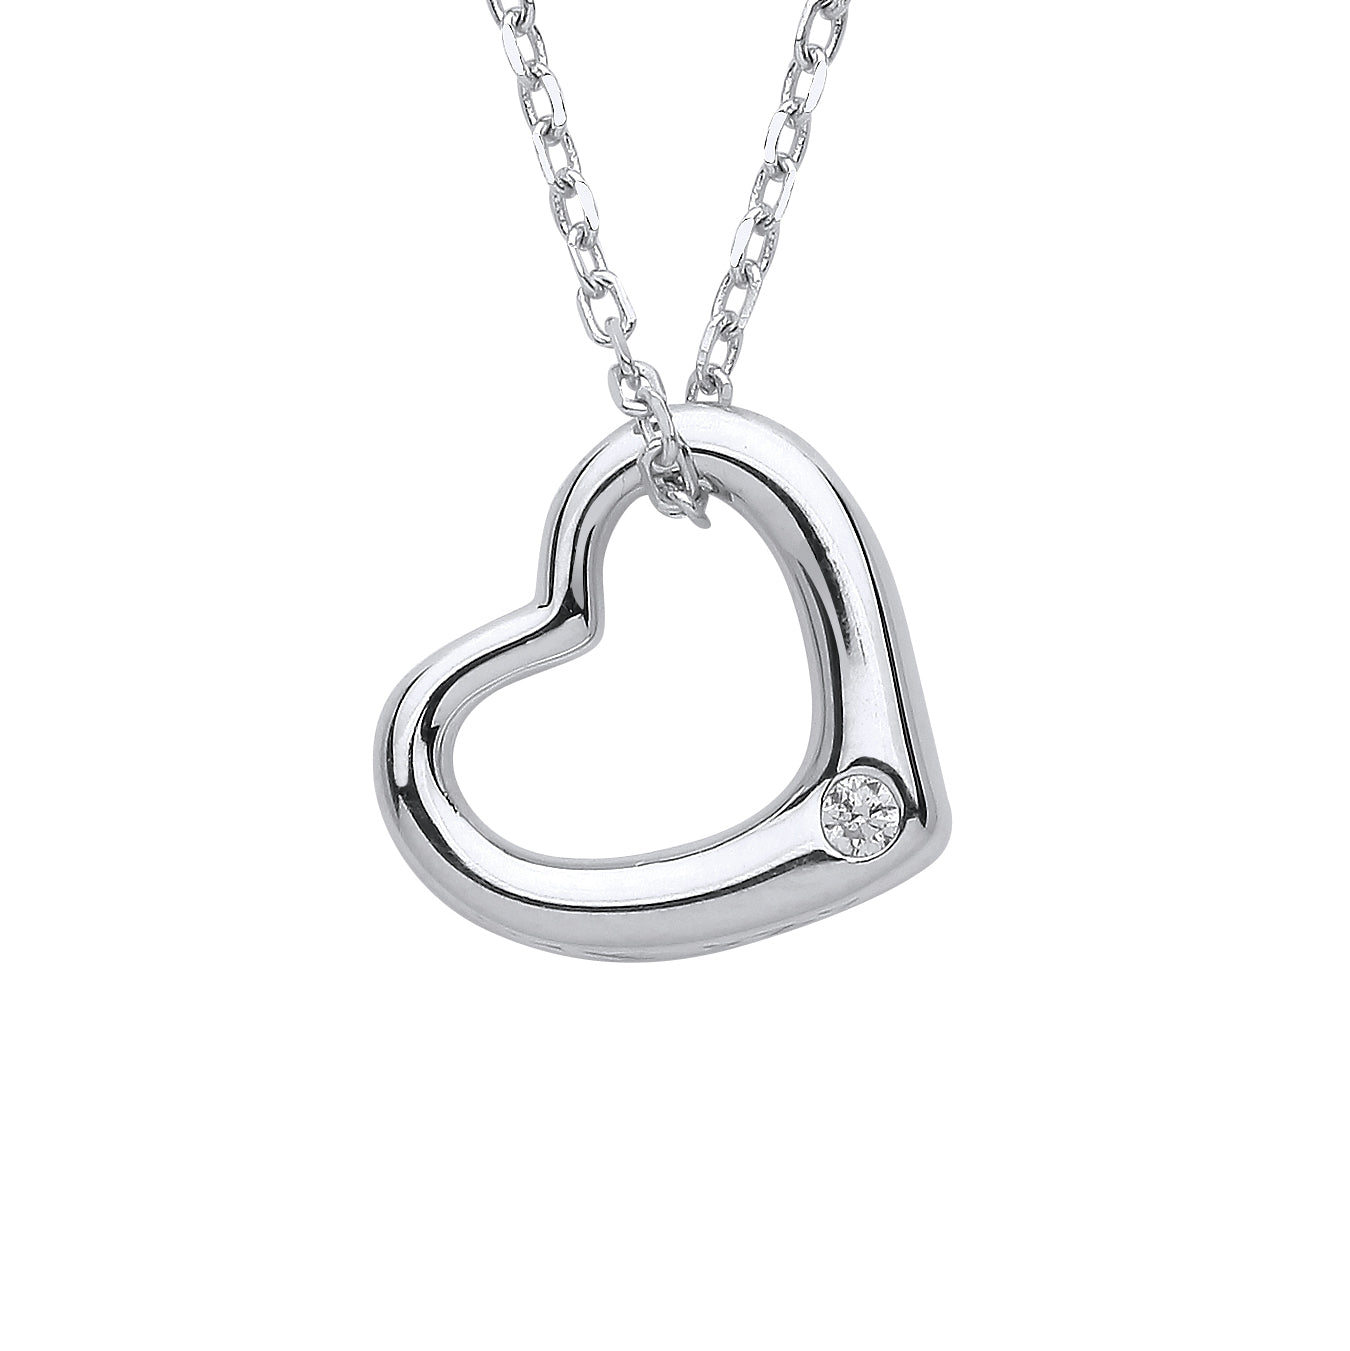 Silver  Open Love Heart Solitaire Lavalier Necklace - GVK383